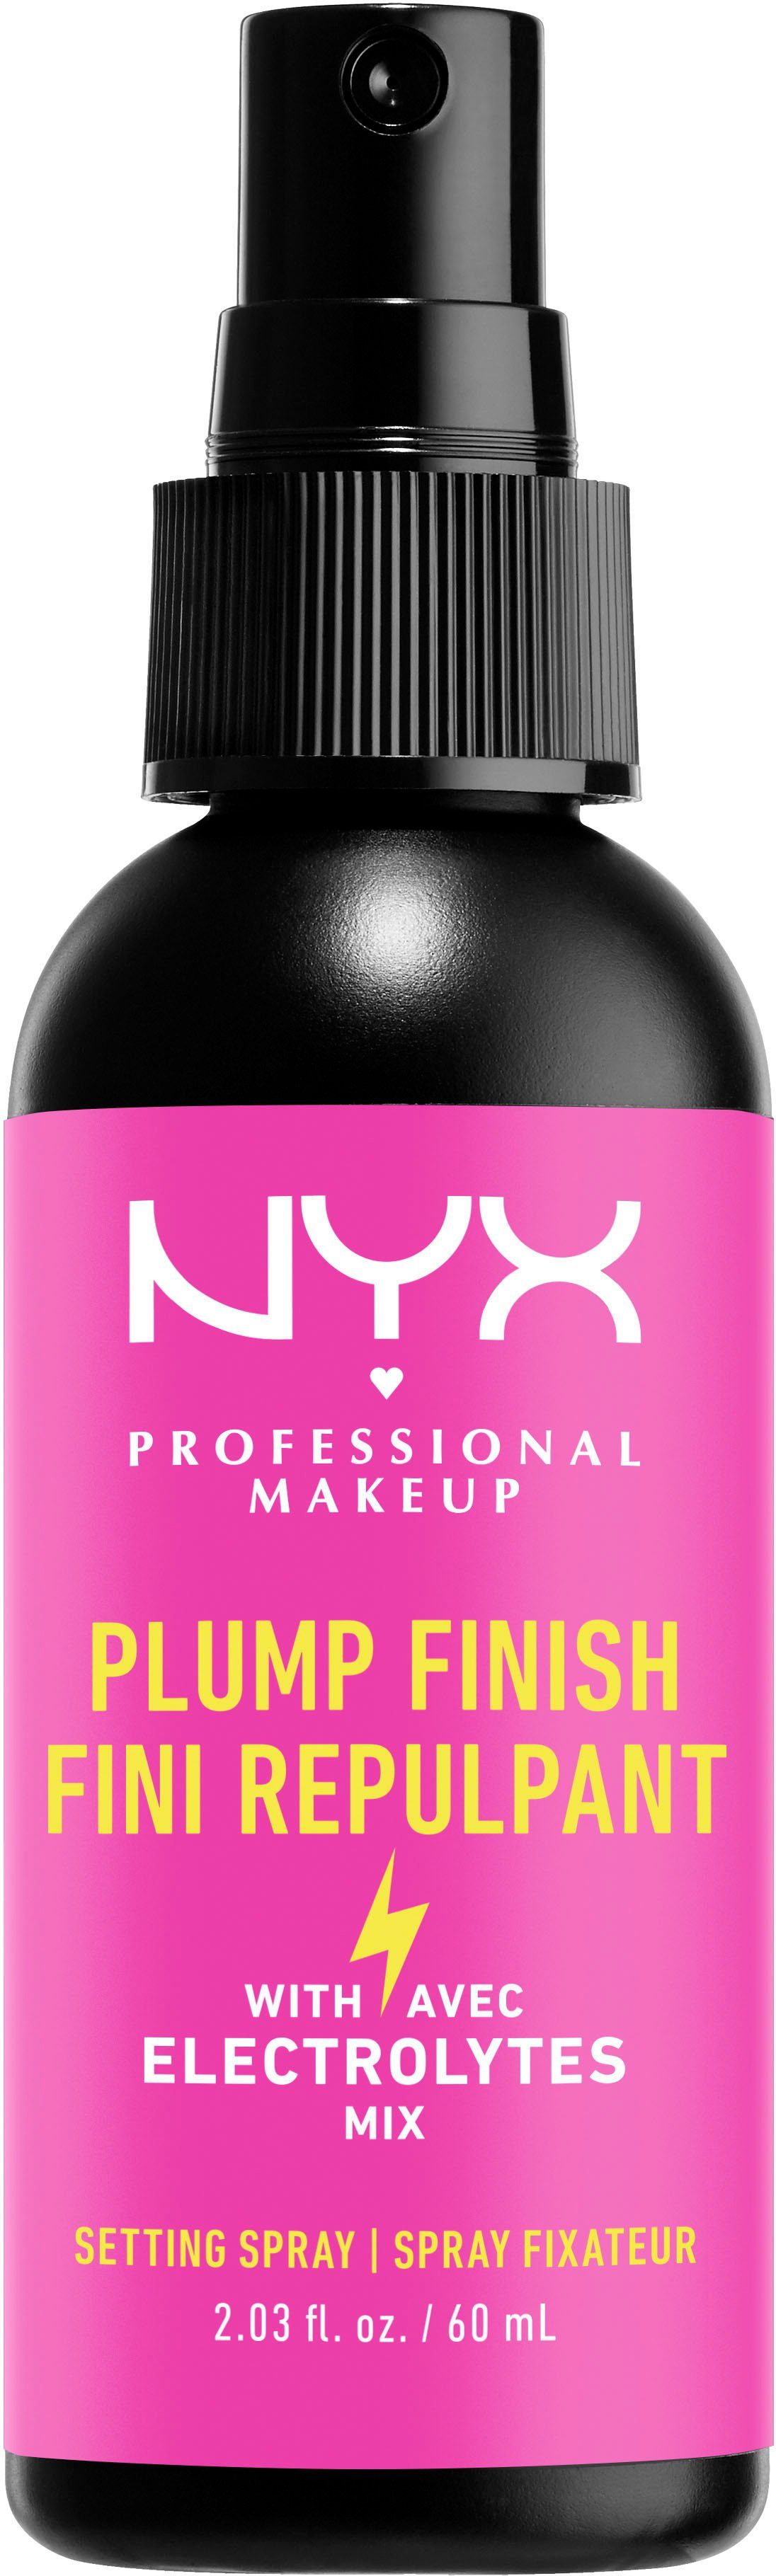 NYX Gesichtsspray Professional Setting Spray, Makeup Finish mit Hyaluron Plump